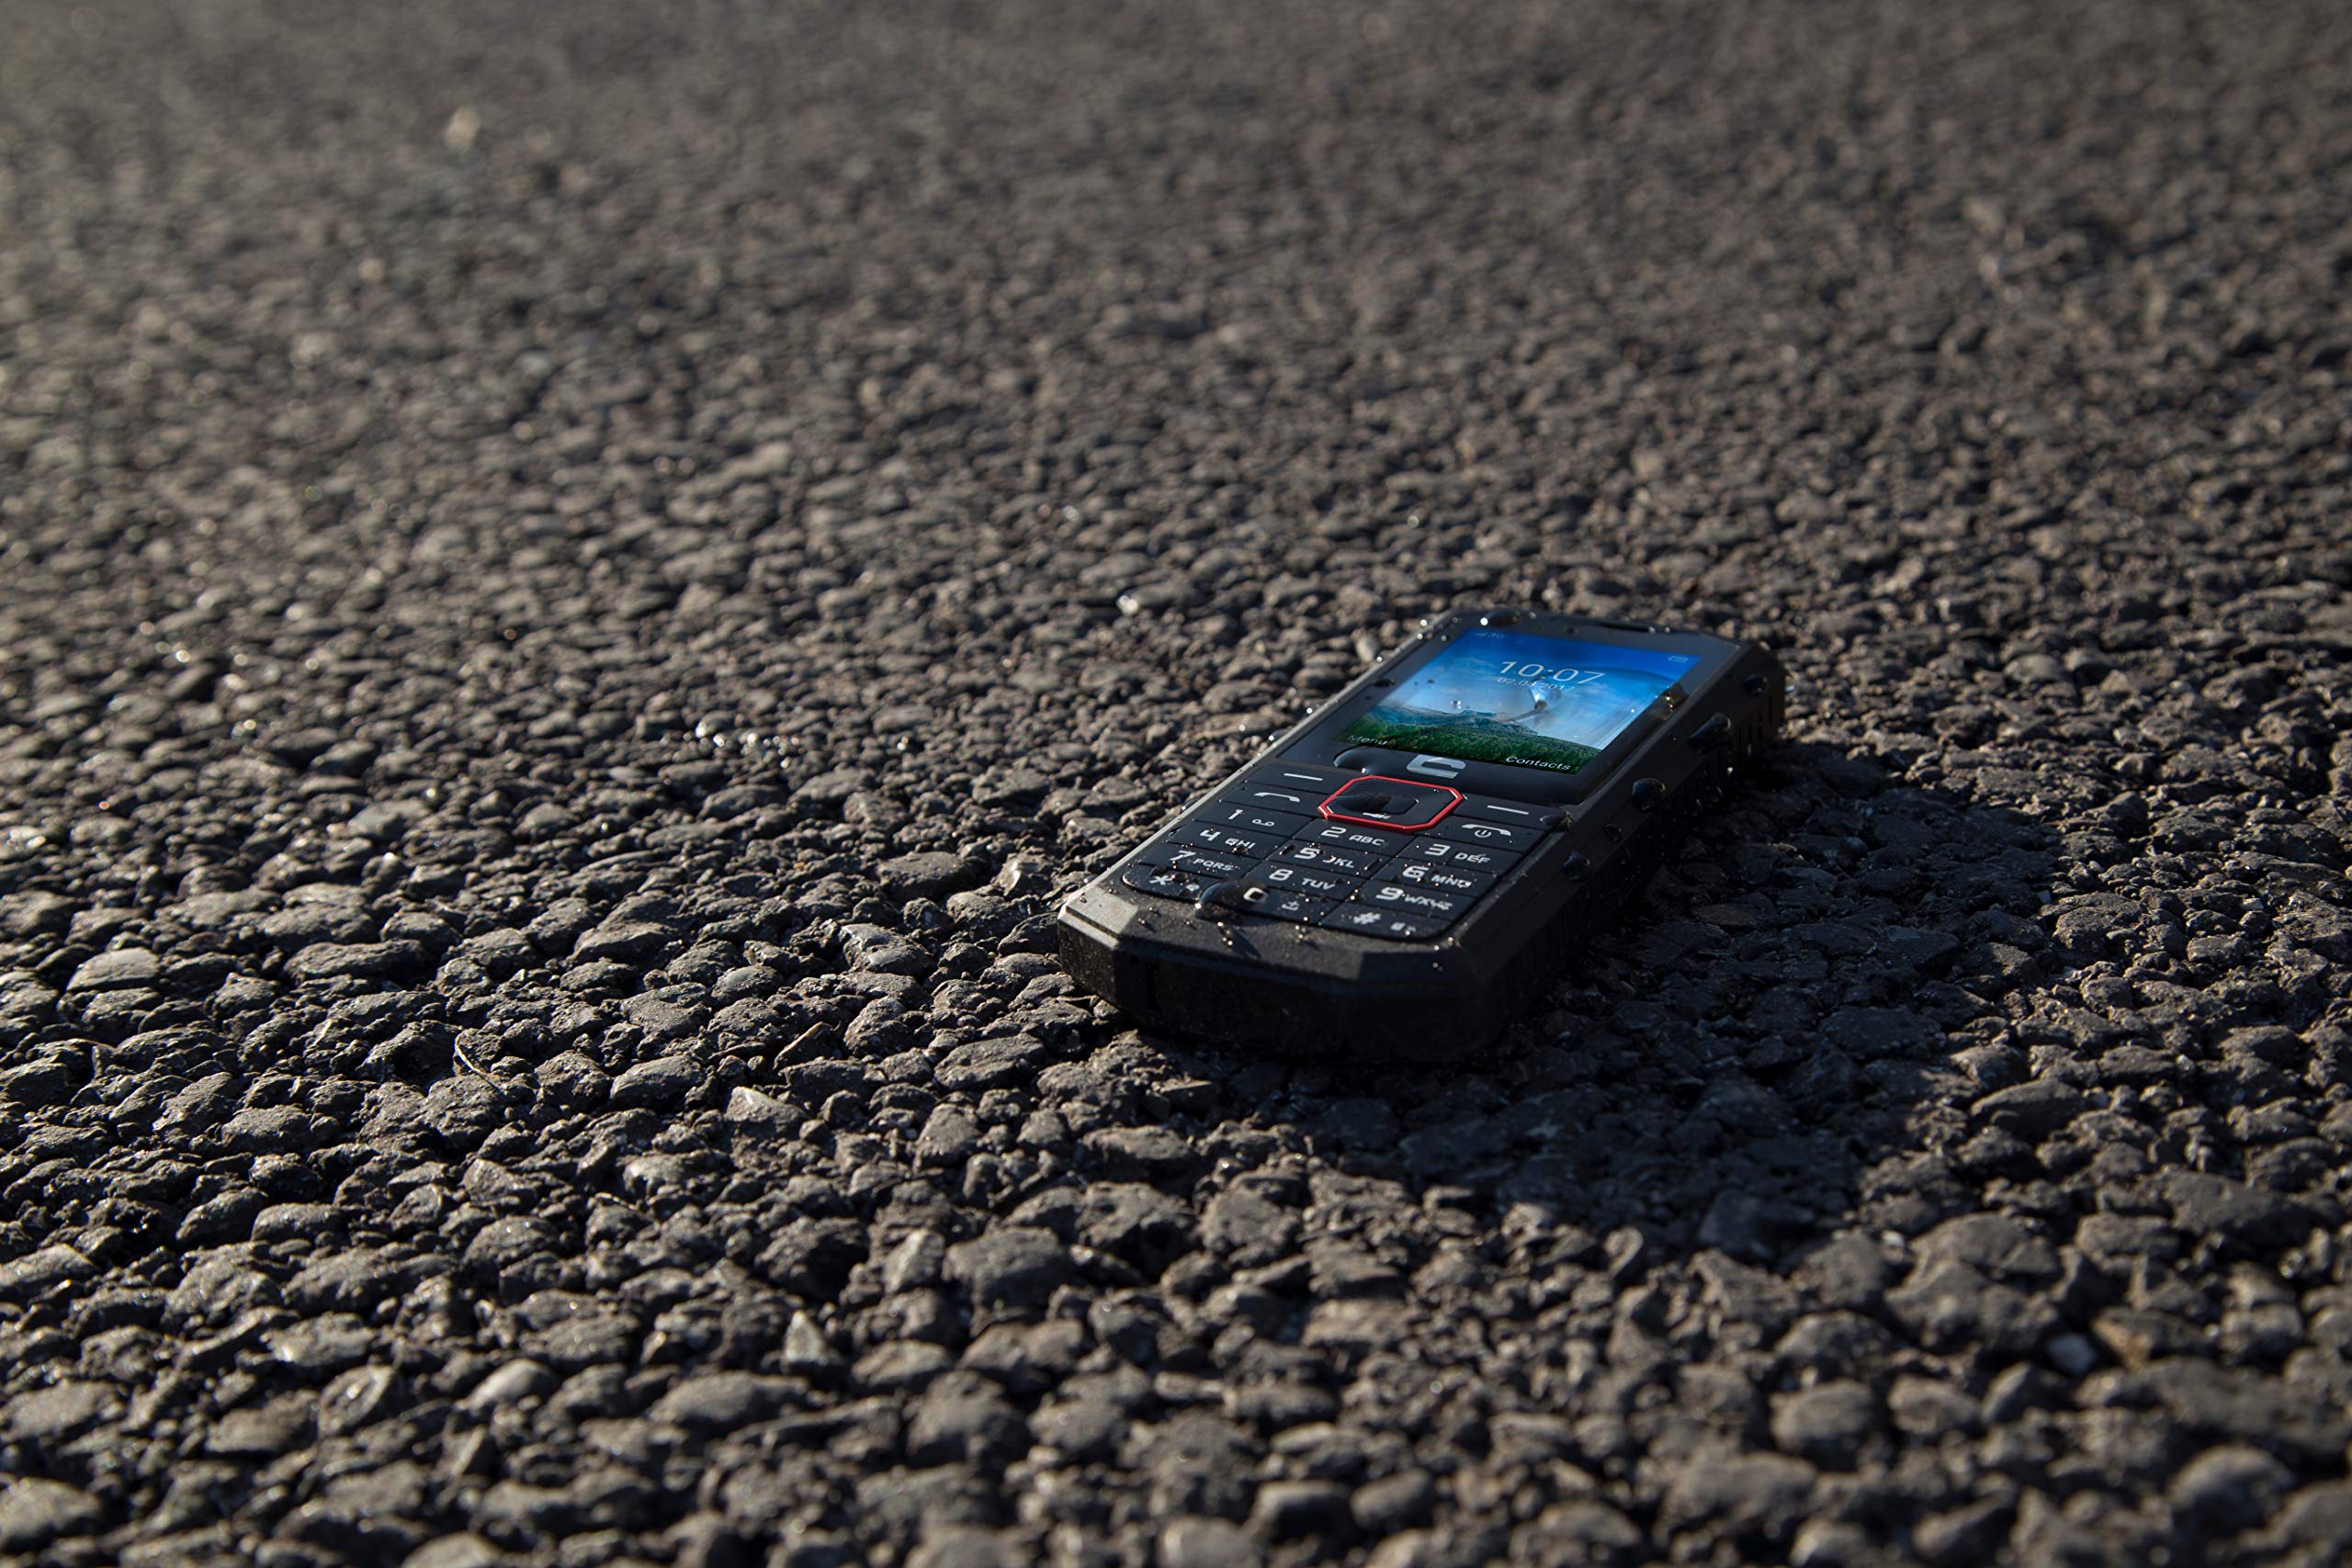 CROSSCALL Spider-X5 Unlocked Mobile Phone 3G+ (2.4 Inch Screen - 64 GB ROM - Dual SIM) Black